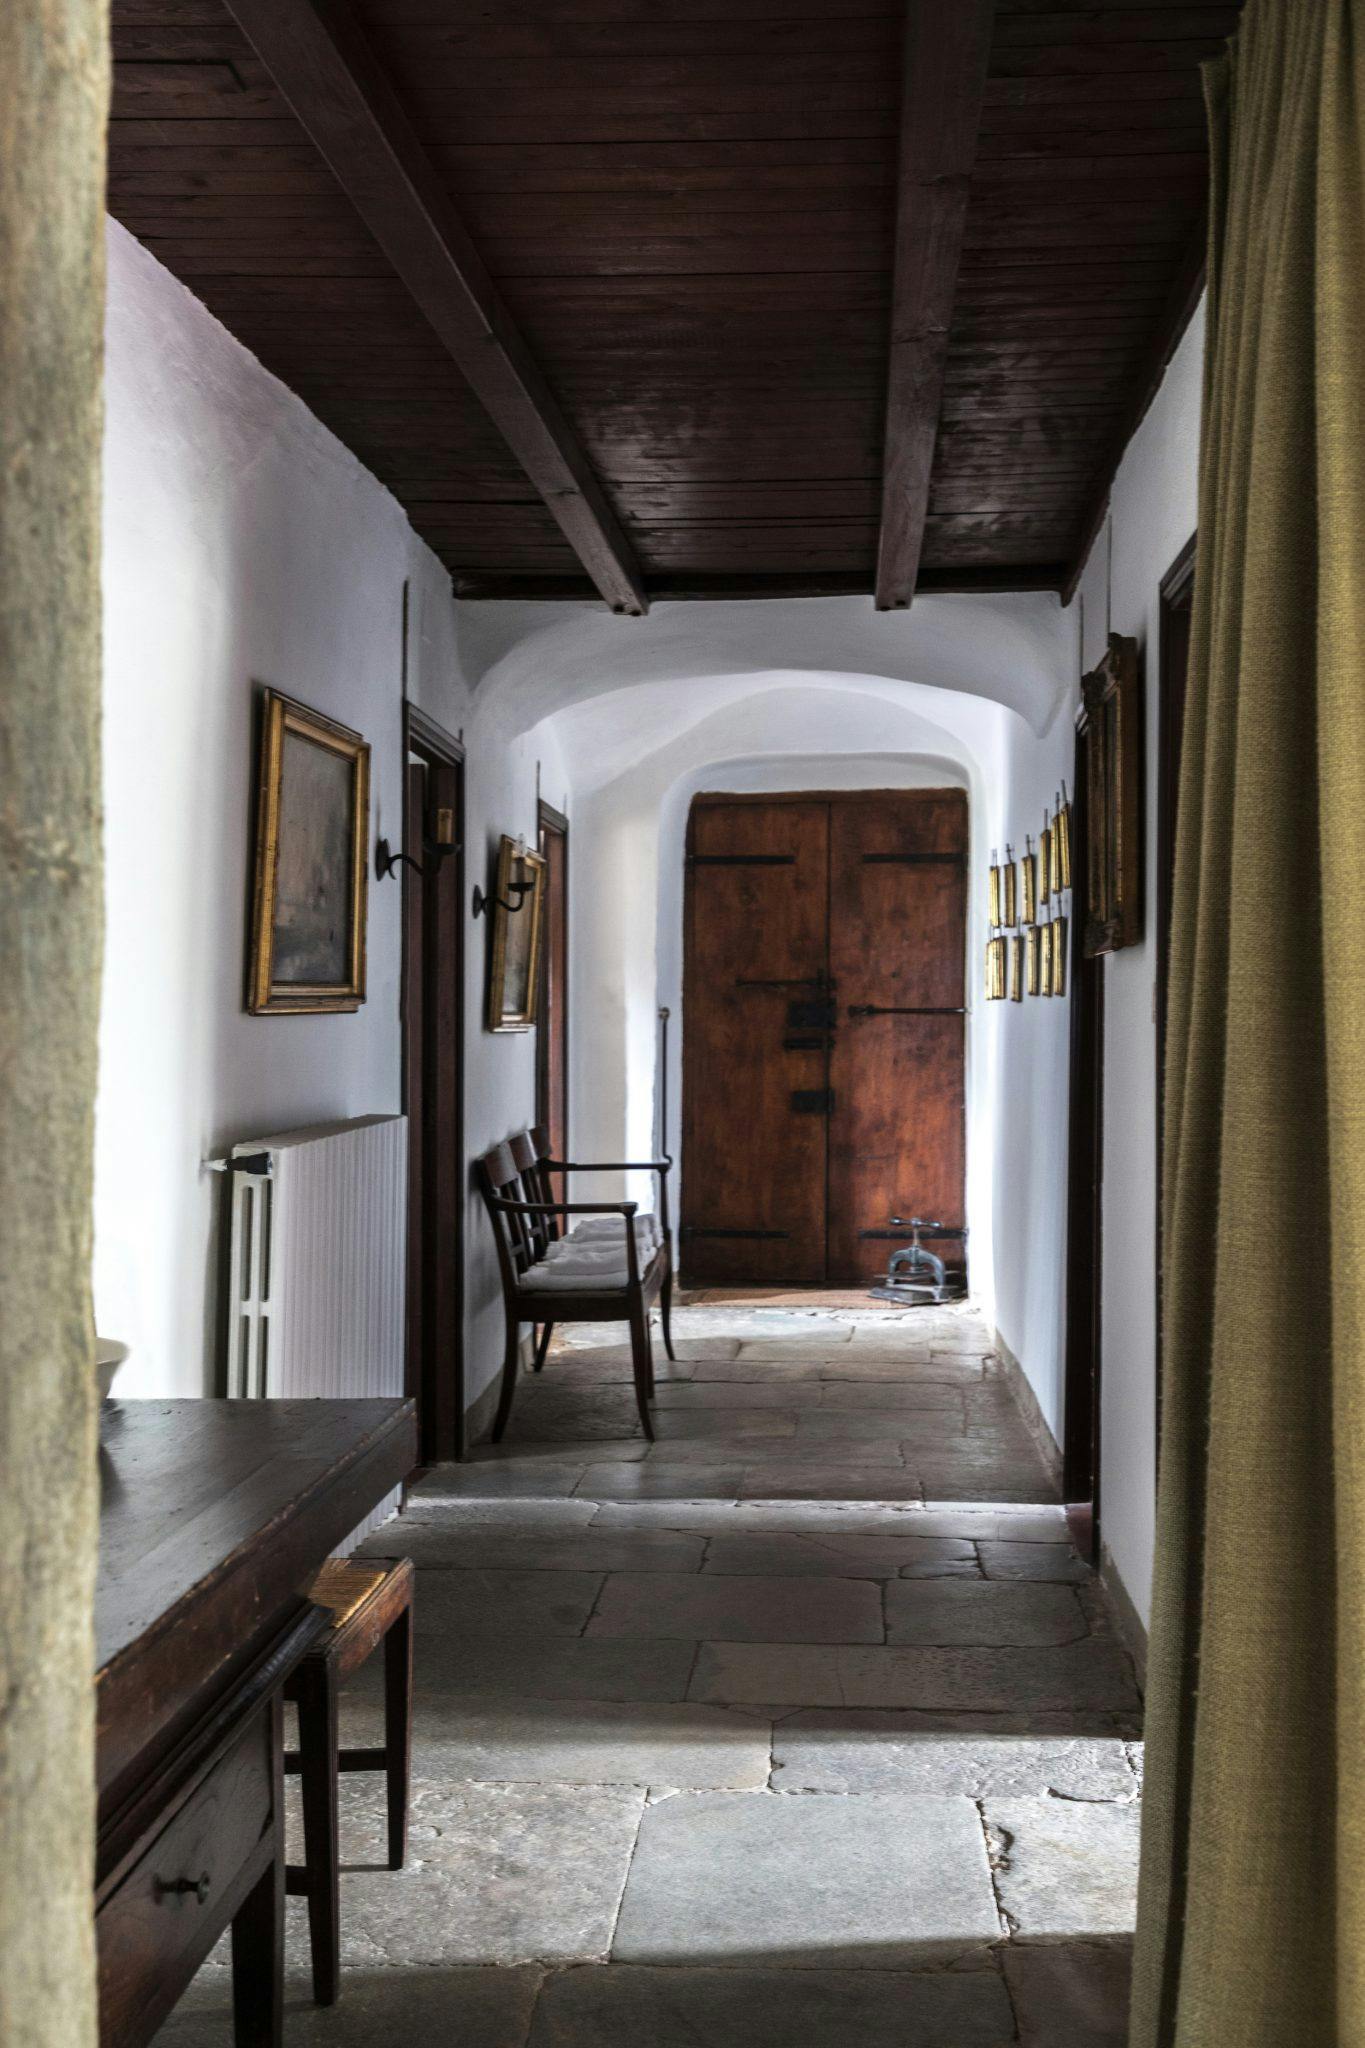 Corridor inside the convent and monastic decor